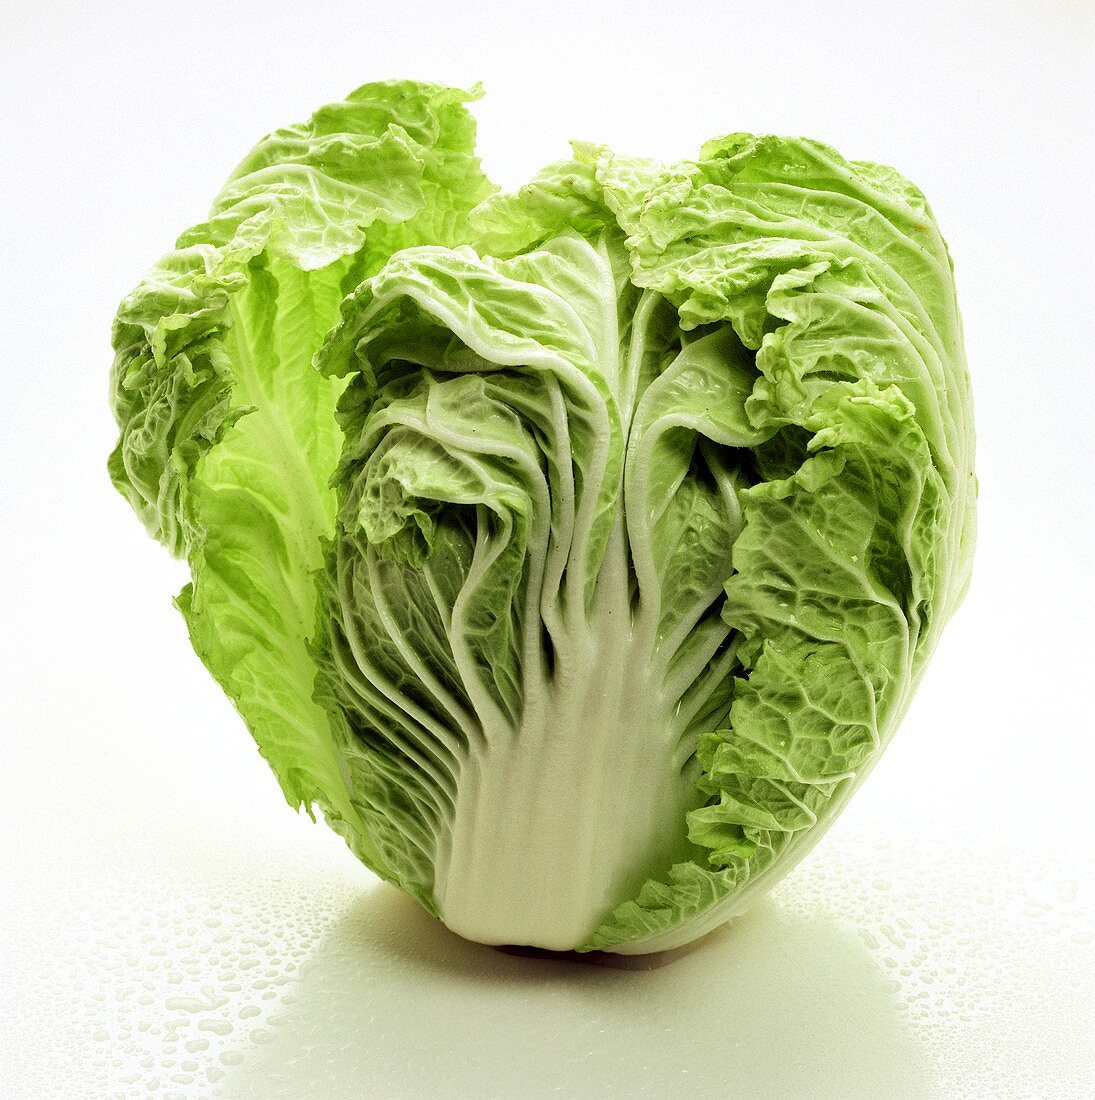 Head of Cabbage Split in Half